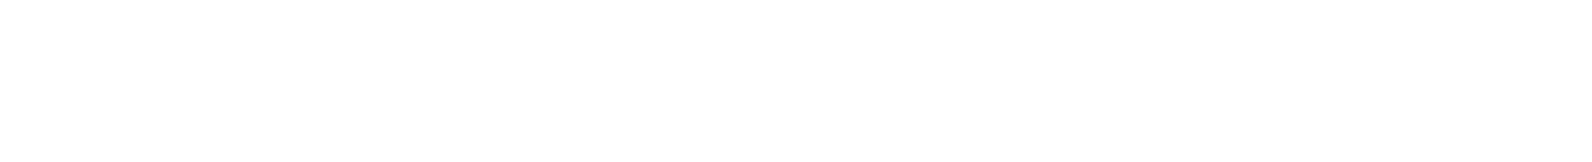 Ford Otosan
 logo large for dark backgrounds (transparent PNG)